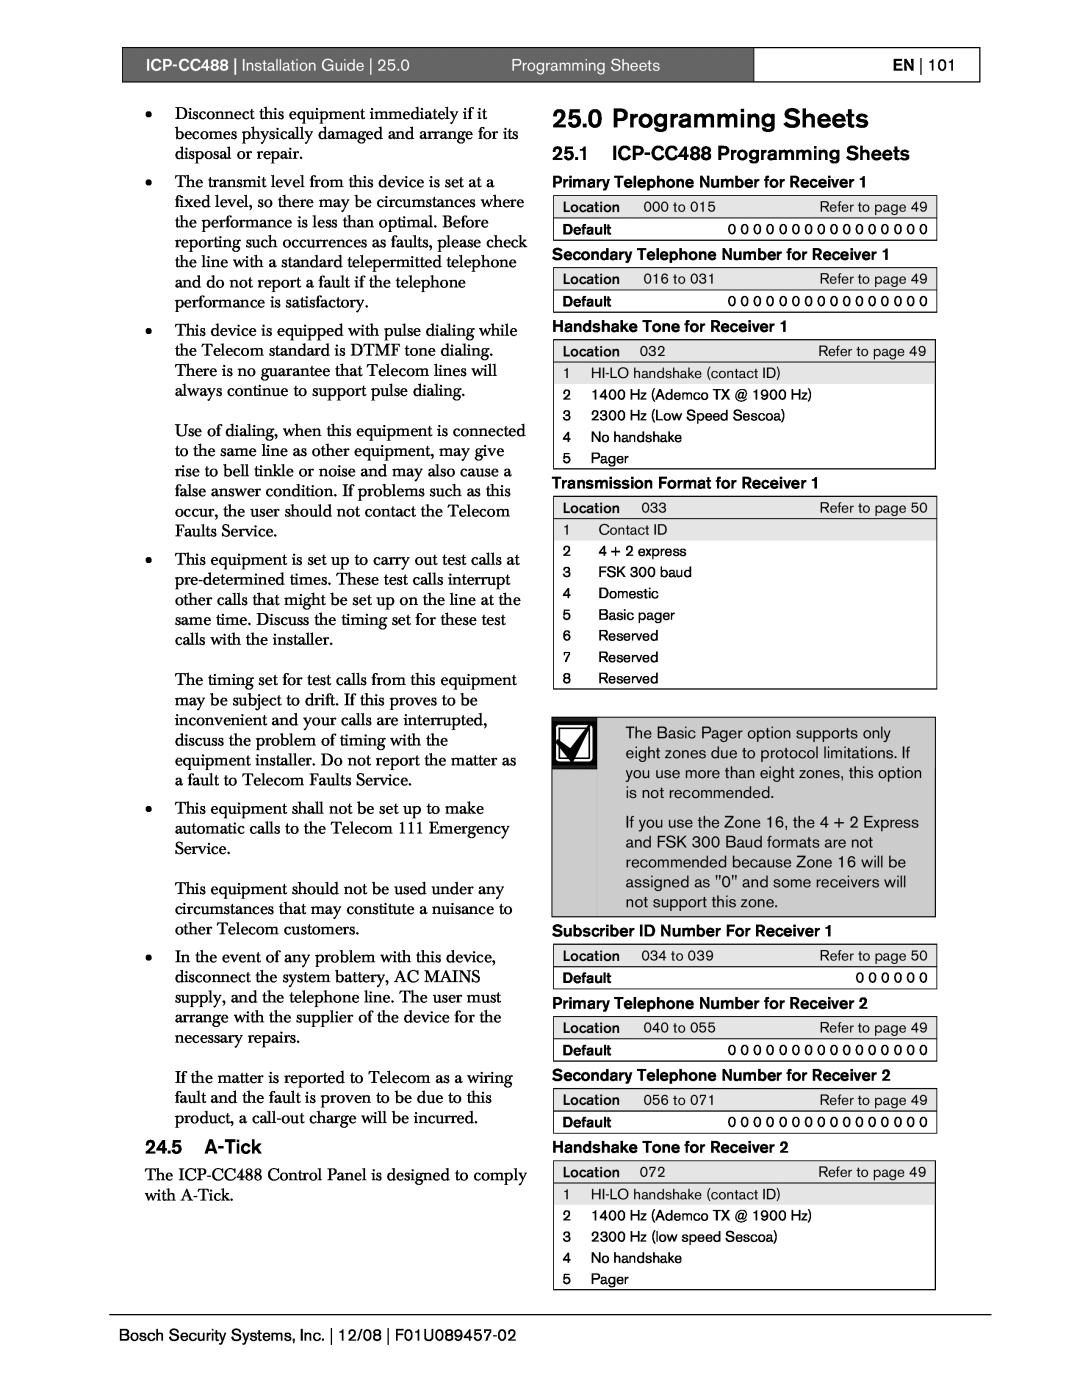 Bosch Appliances 25.0Programming Sheets, 24.5A-Tick, 25.1ICP-CC488Programming Sheets, ICP-CC488| Installation Guide 